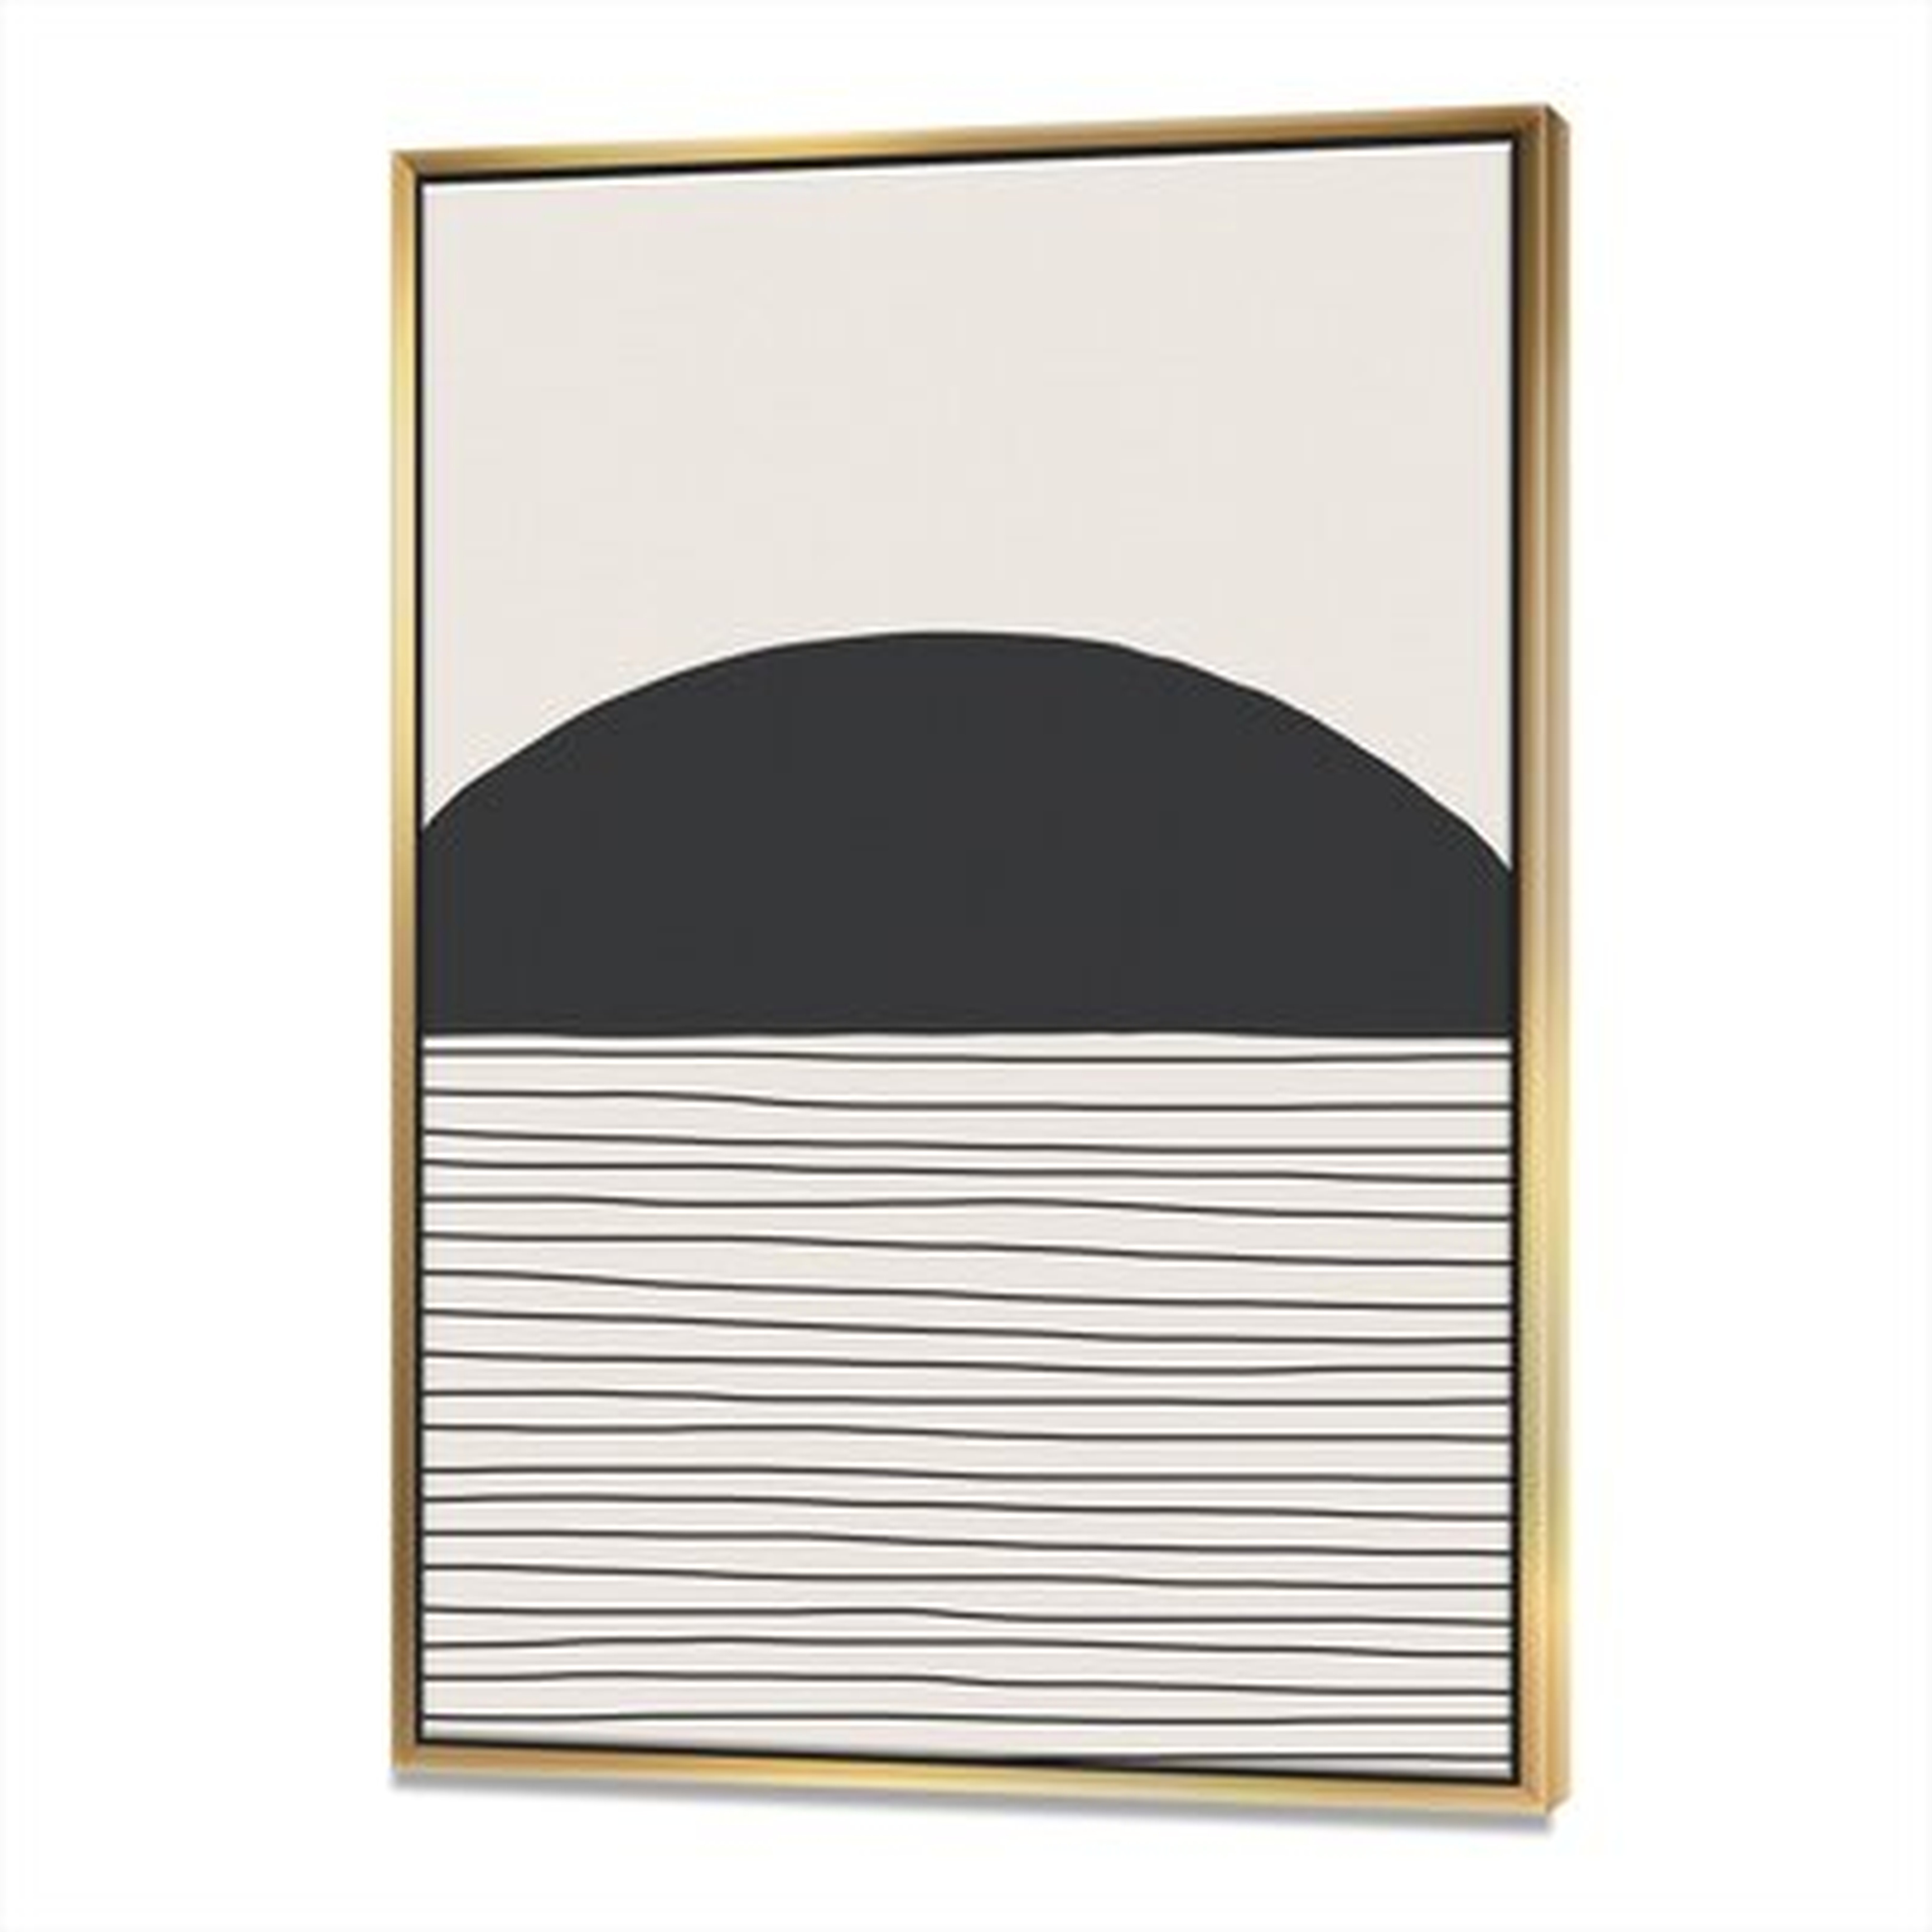 Minimal Geometric Lines and Circle V - Floater Frame Print on Canvas - Wayfair